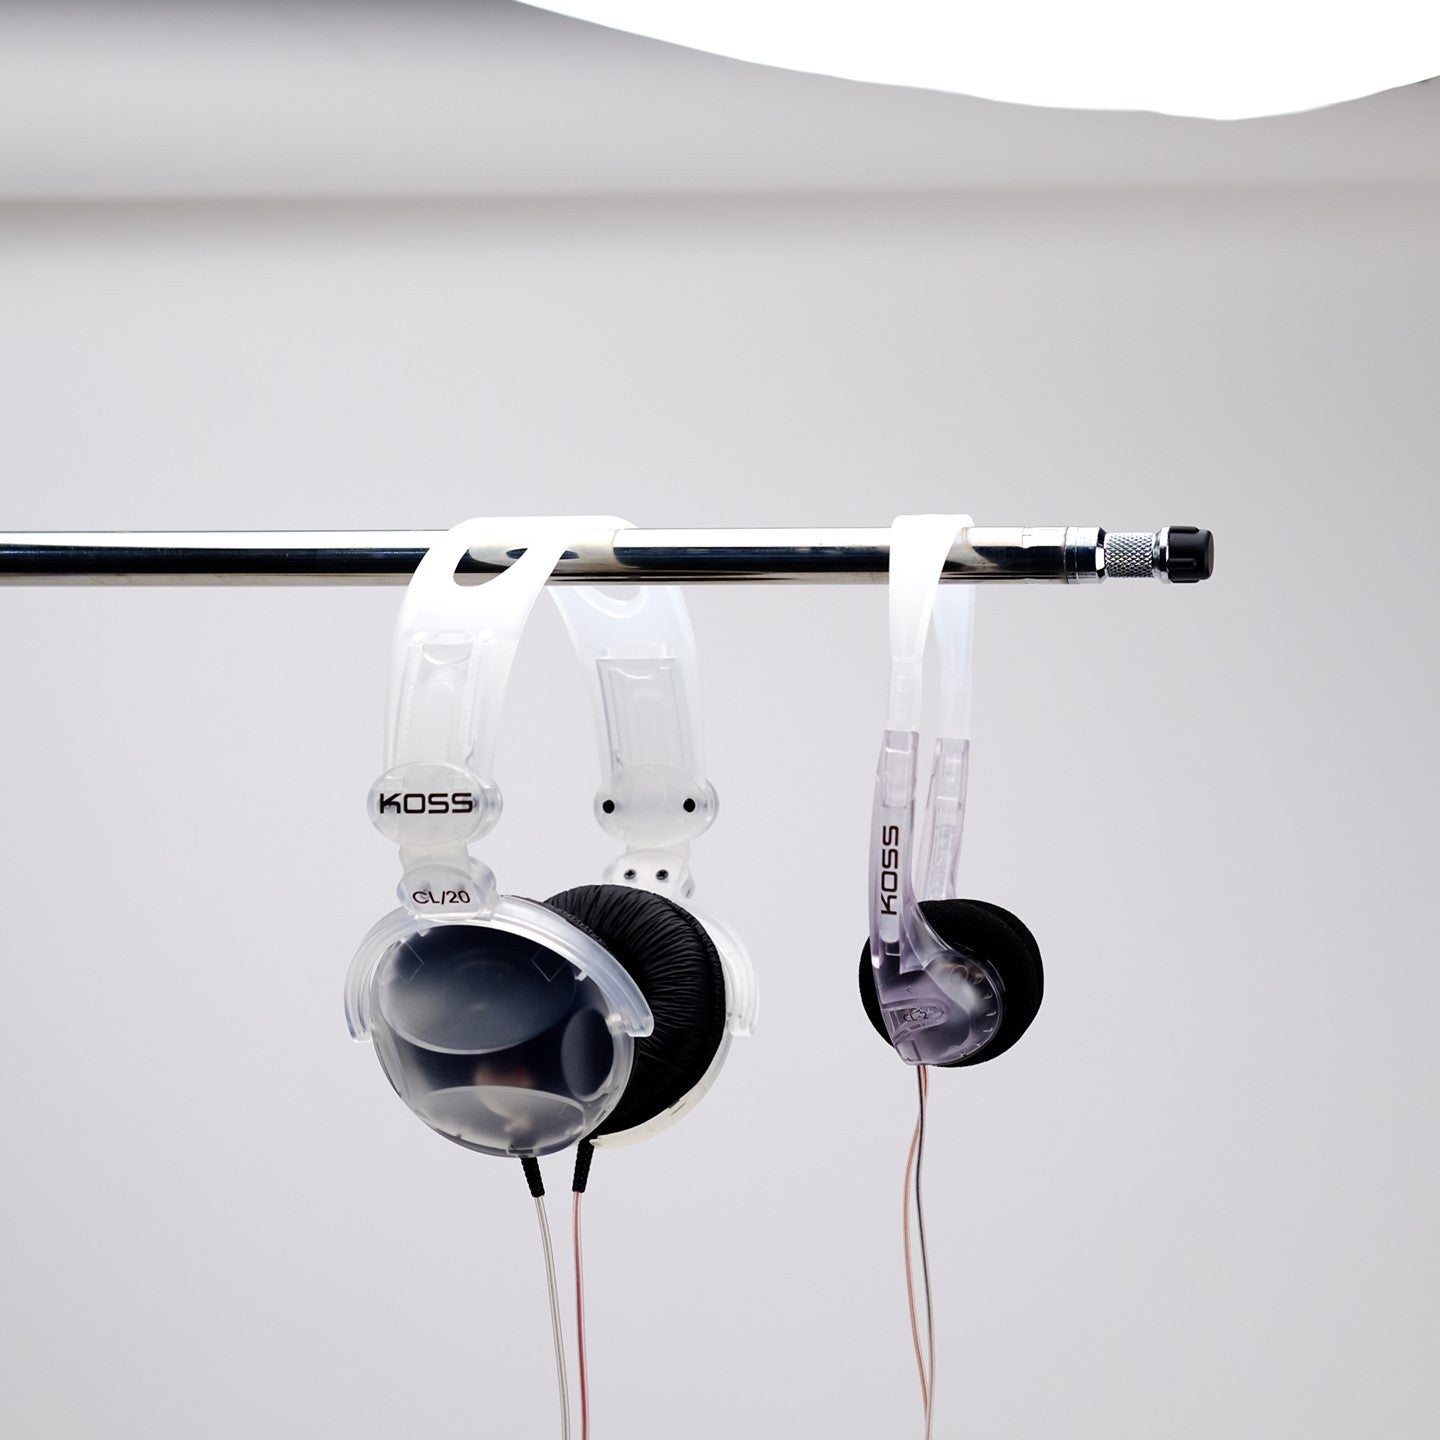 Clear Koss headphones hanging on pole